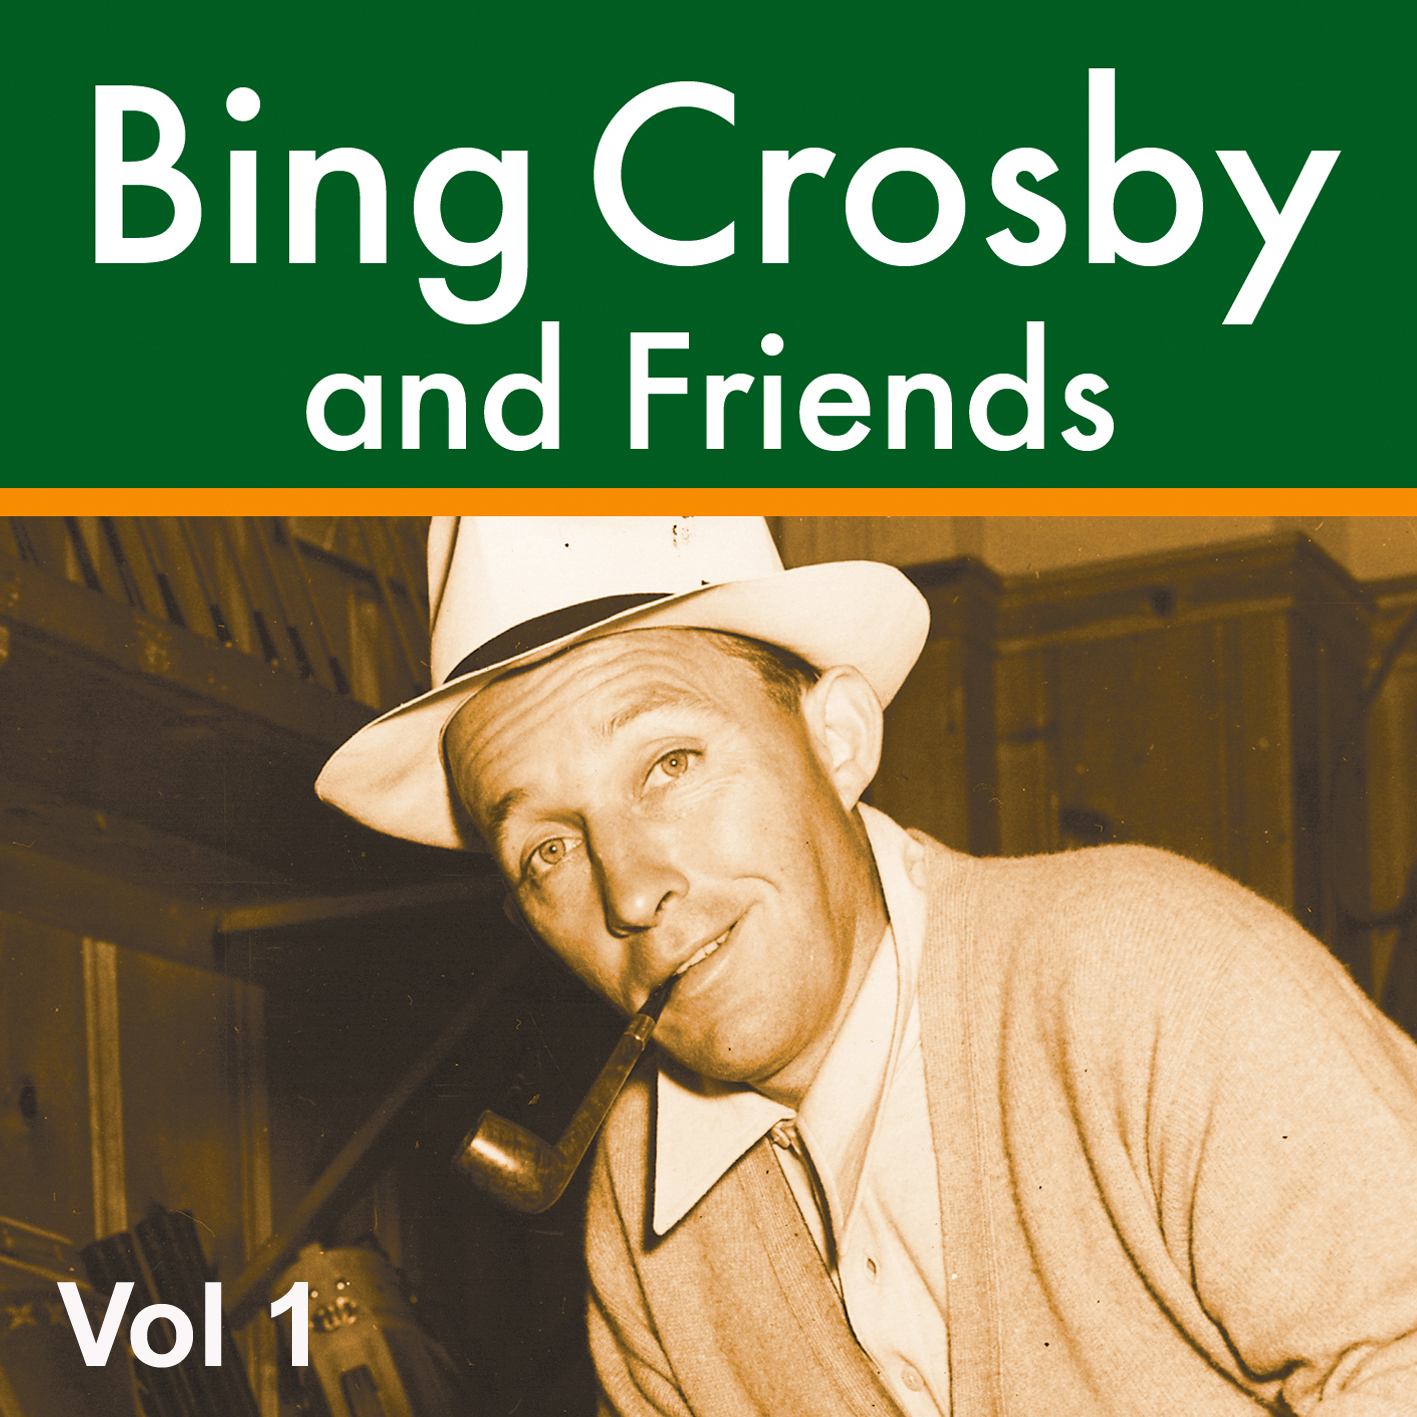 Bing Crosby and Friends Vol 1